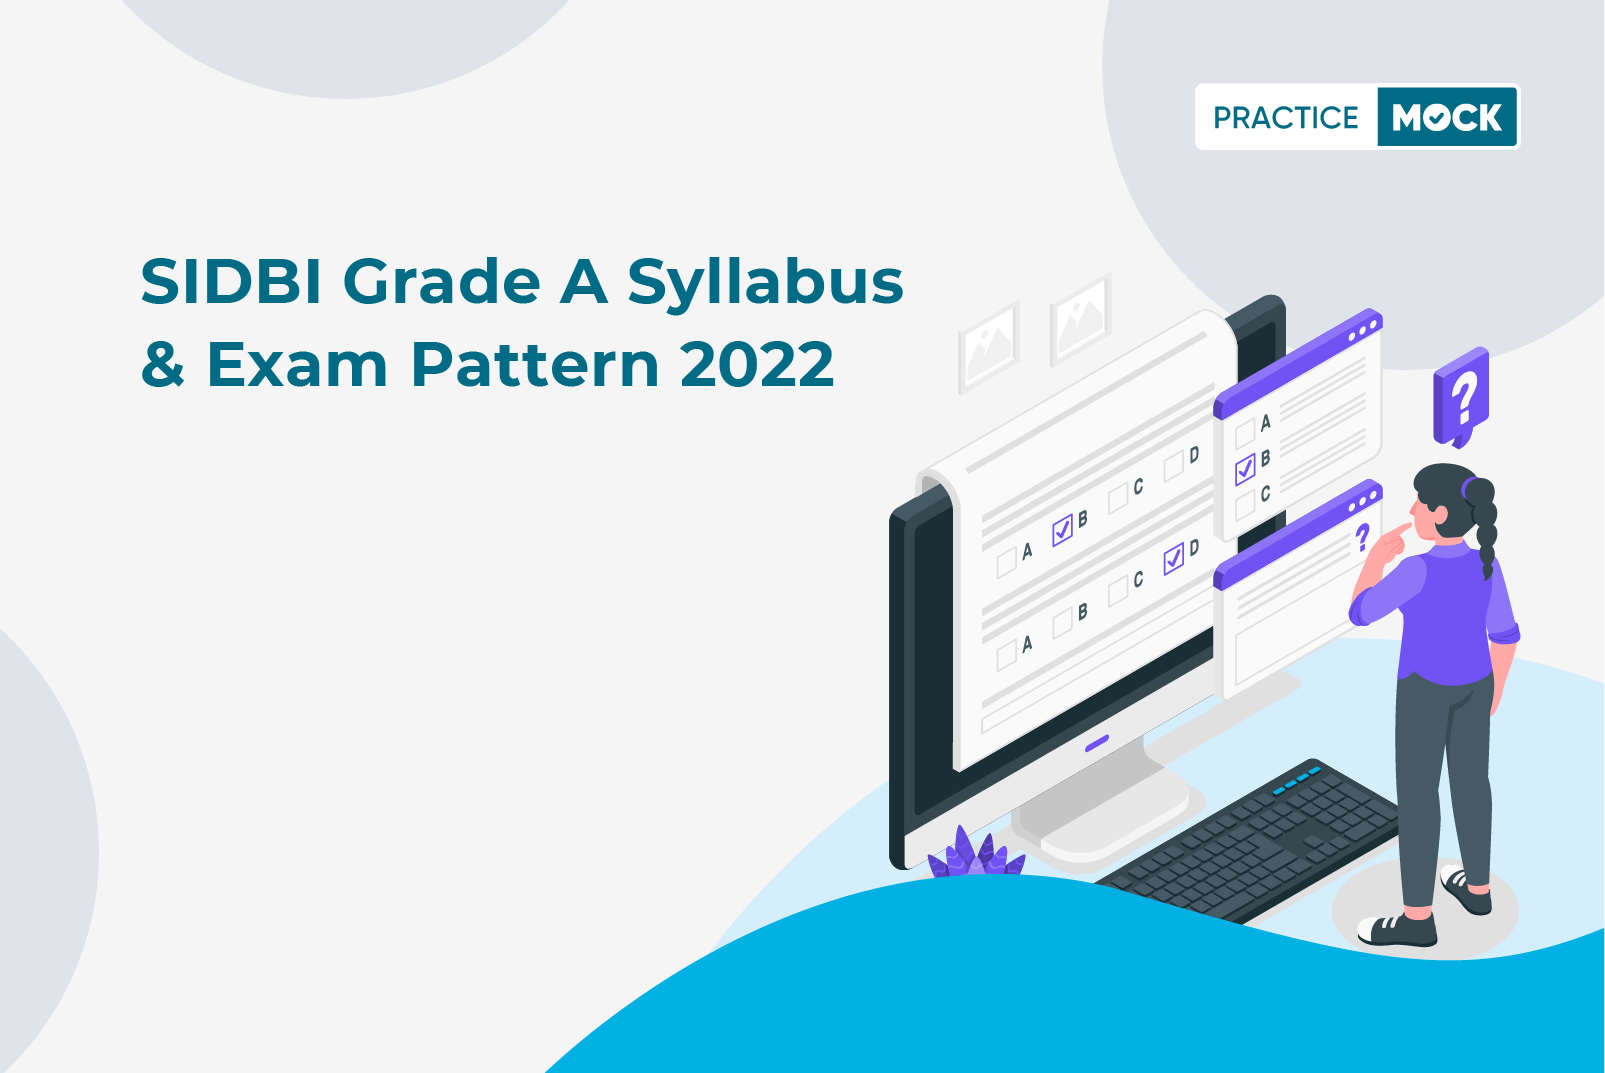 SIDBI Grade A Syllabus & Exam Pattern 2022